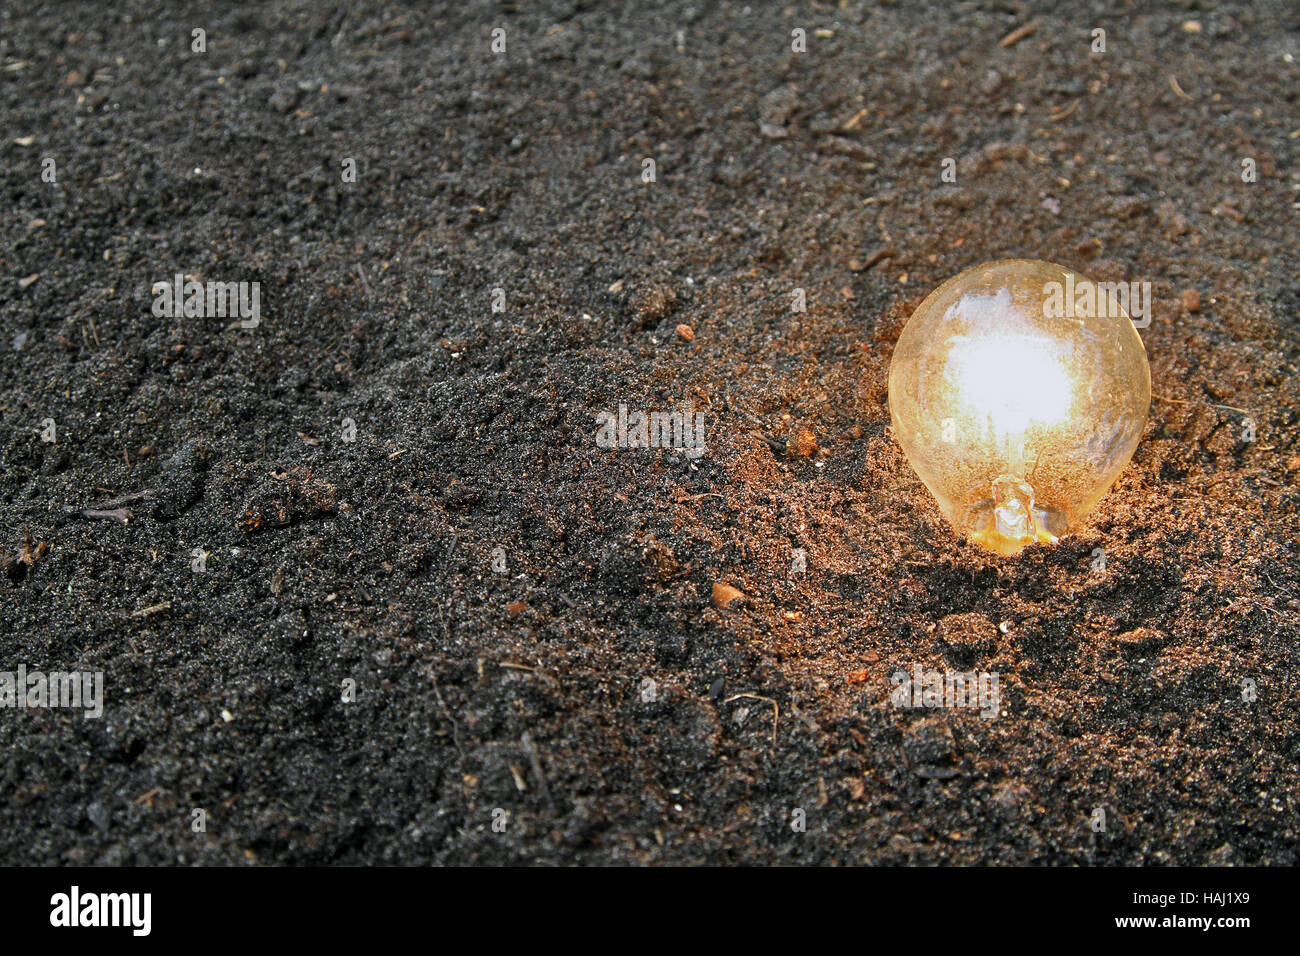 renewable energy - light bulb planted in soil Stock Photo